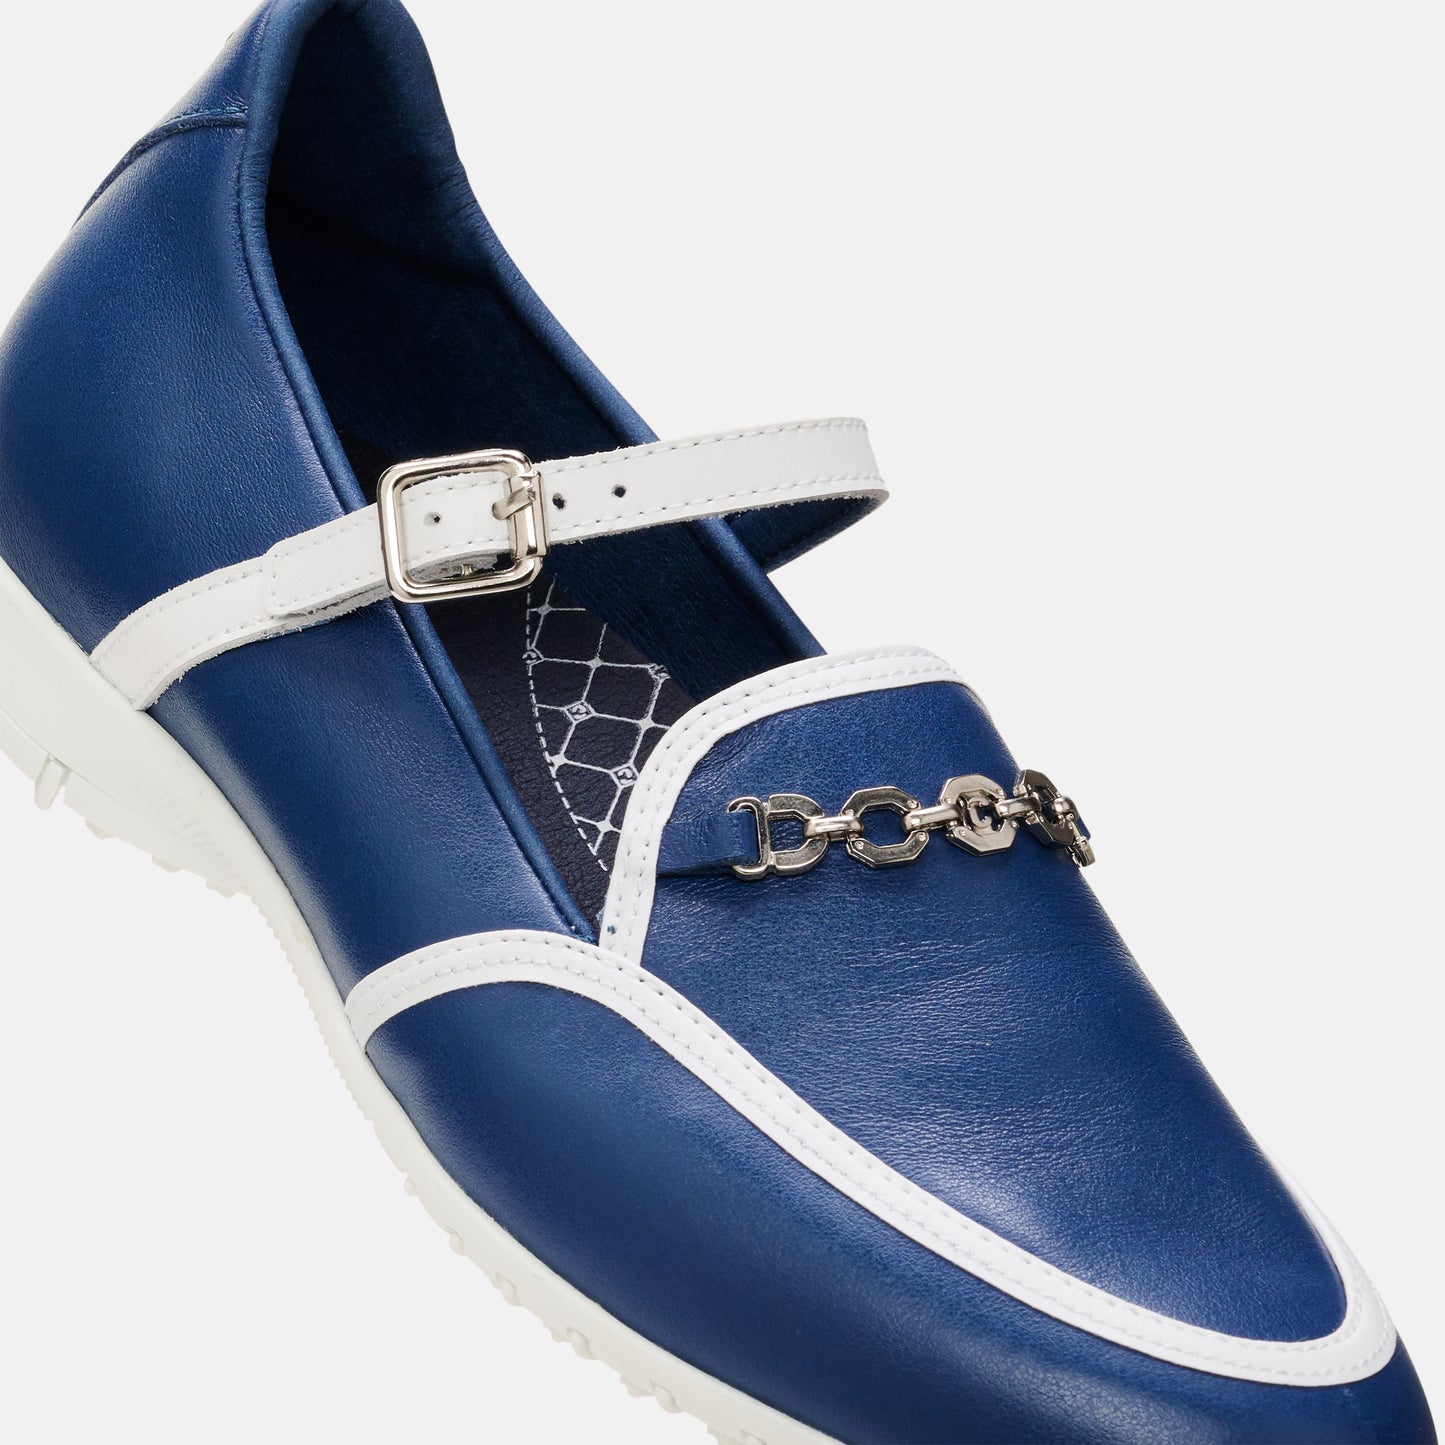 Blue Golf Shoe, Navy Golf Shoes, Lightweight Golf Shoes, Spikeless Golf Shoes, Duca del Cosma Women's Golf Shoes, Classic golf shoes.